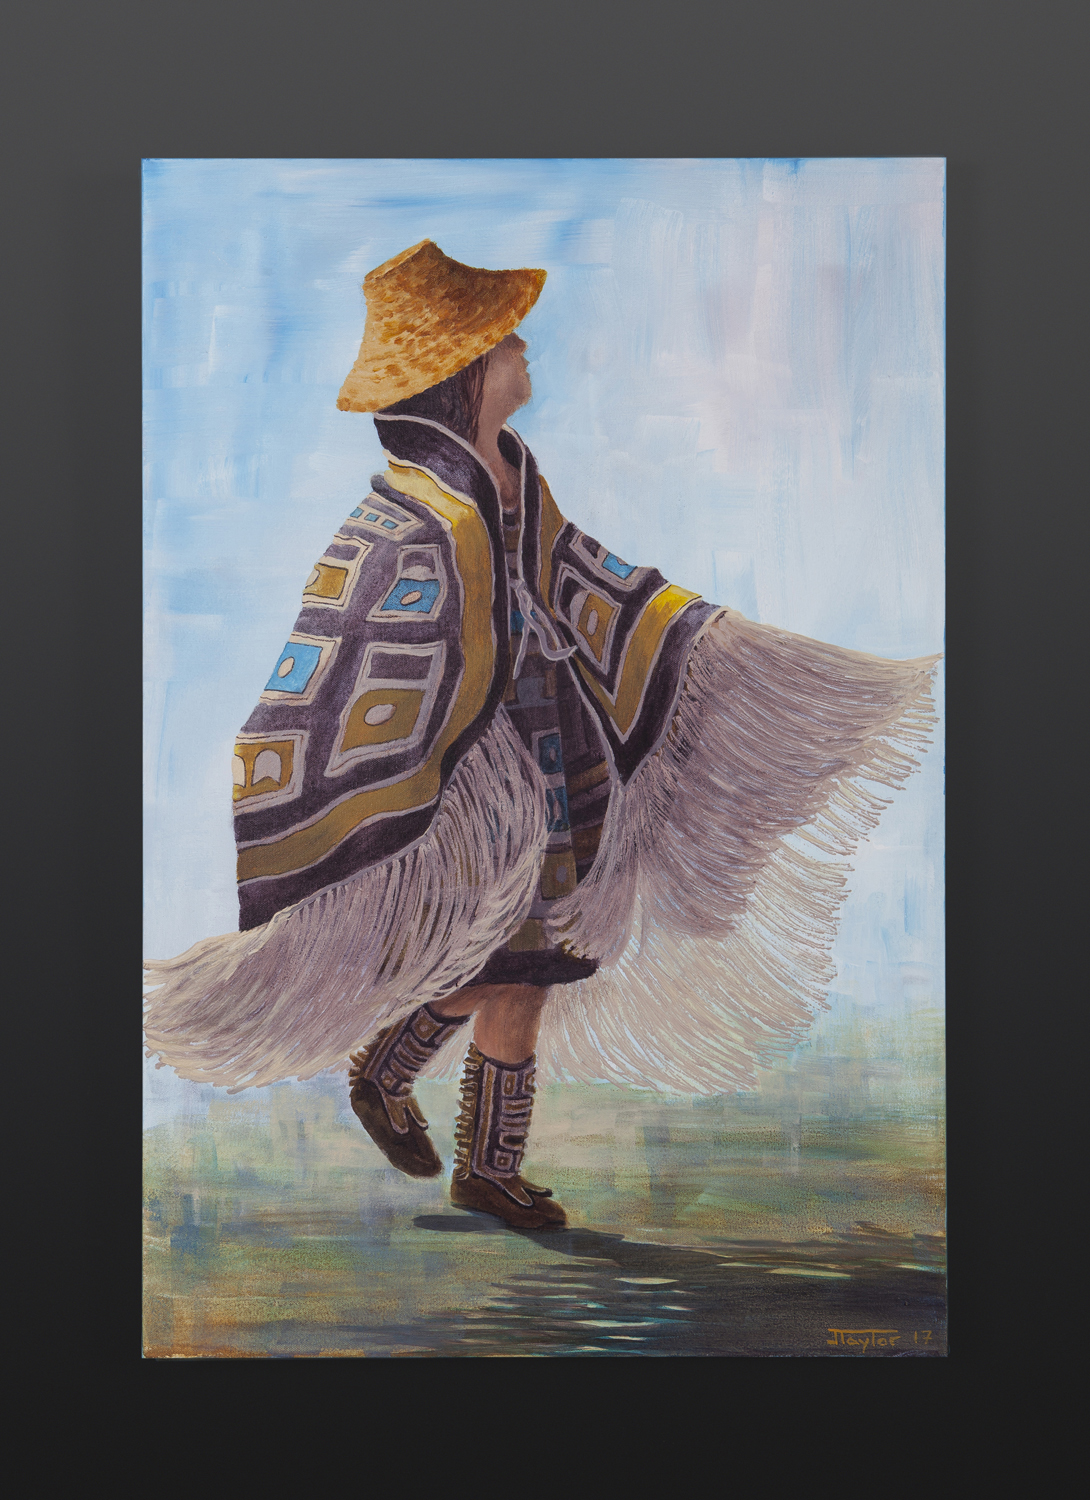 following my sister jean taylor tlingit 20 x 30 original painting on canvas 1650 dancer chilkat